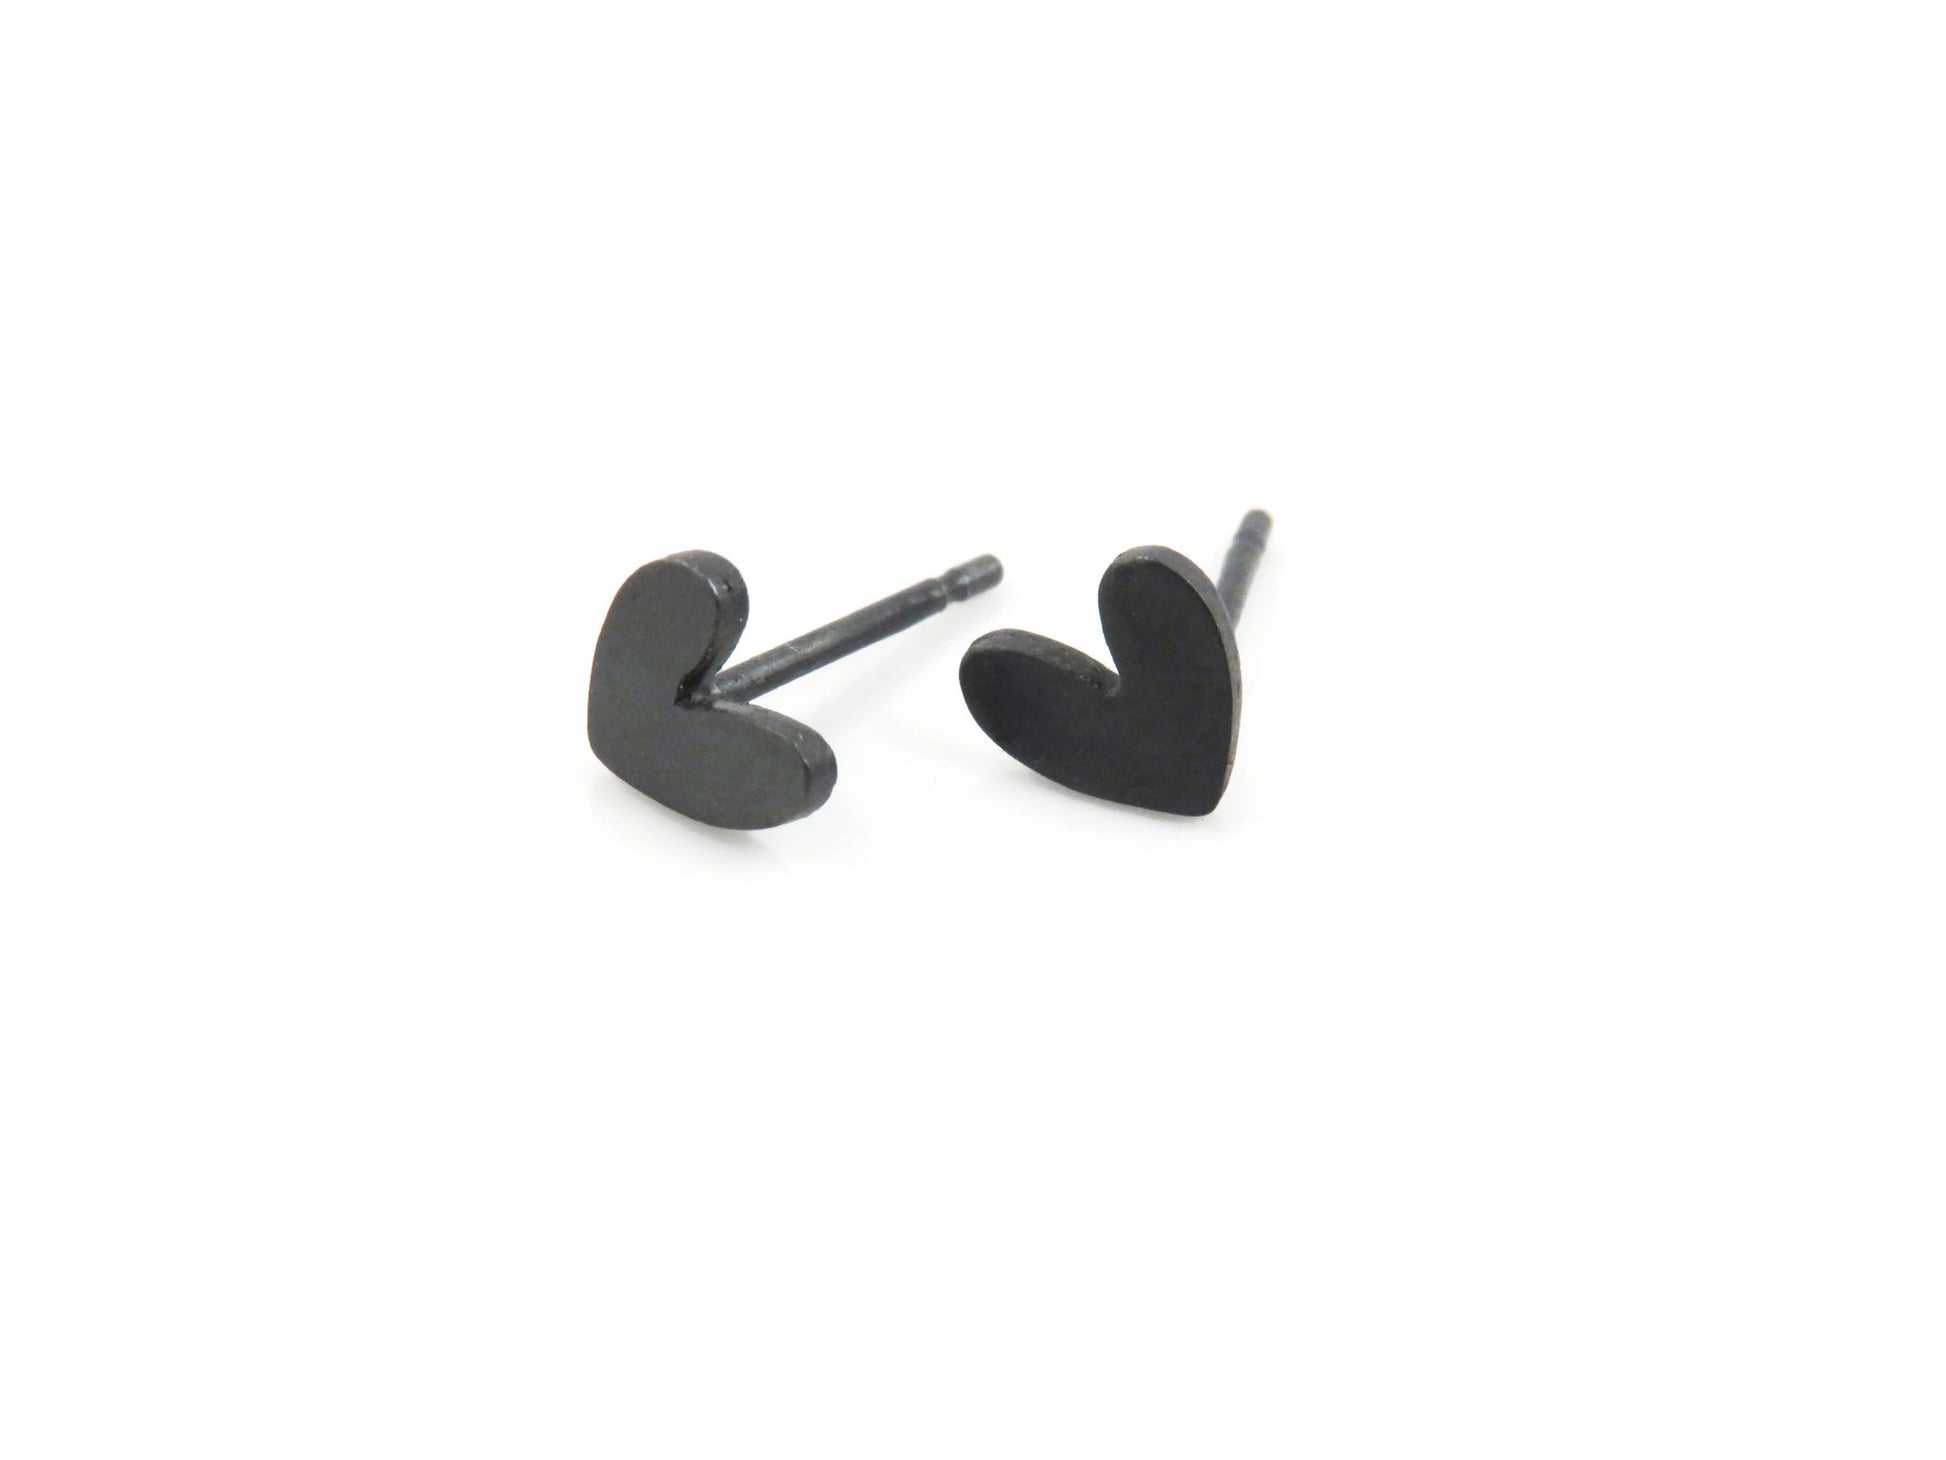 Tiny Hearts Black Silver Stud Earrings